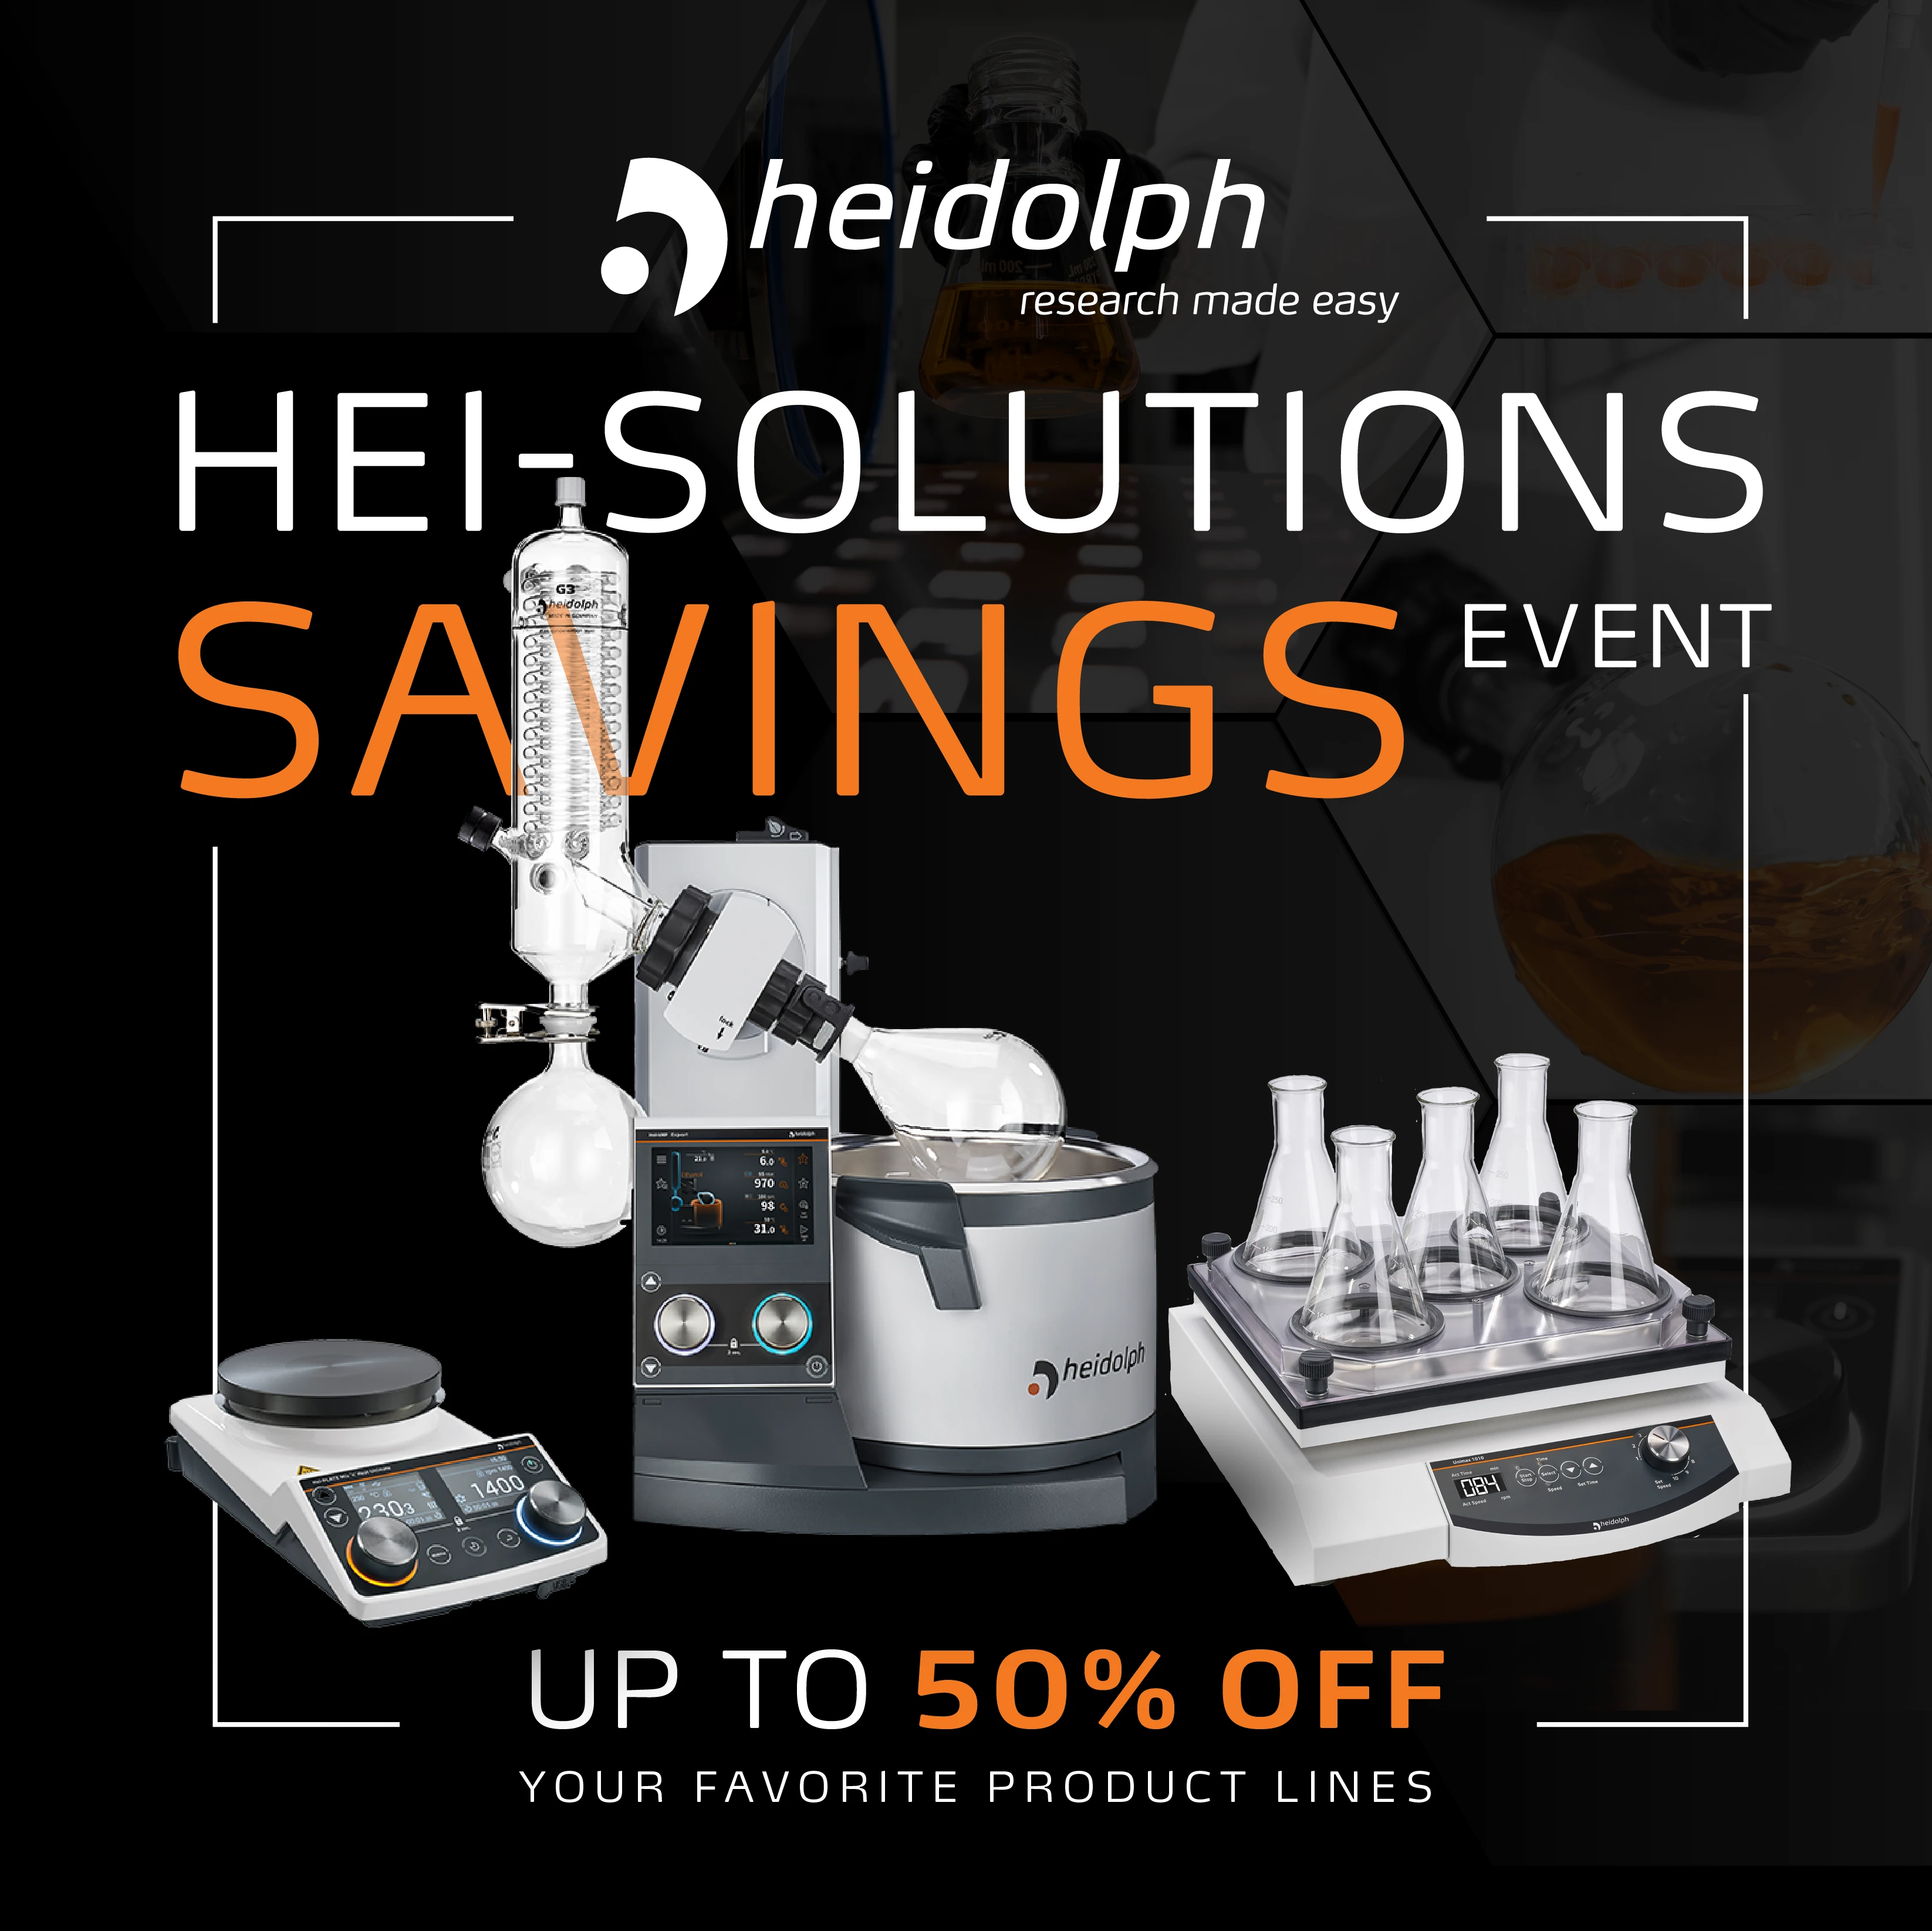 Heidolph Savings Event